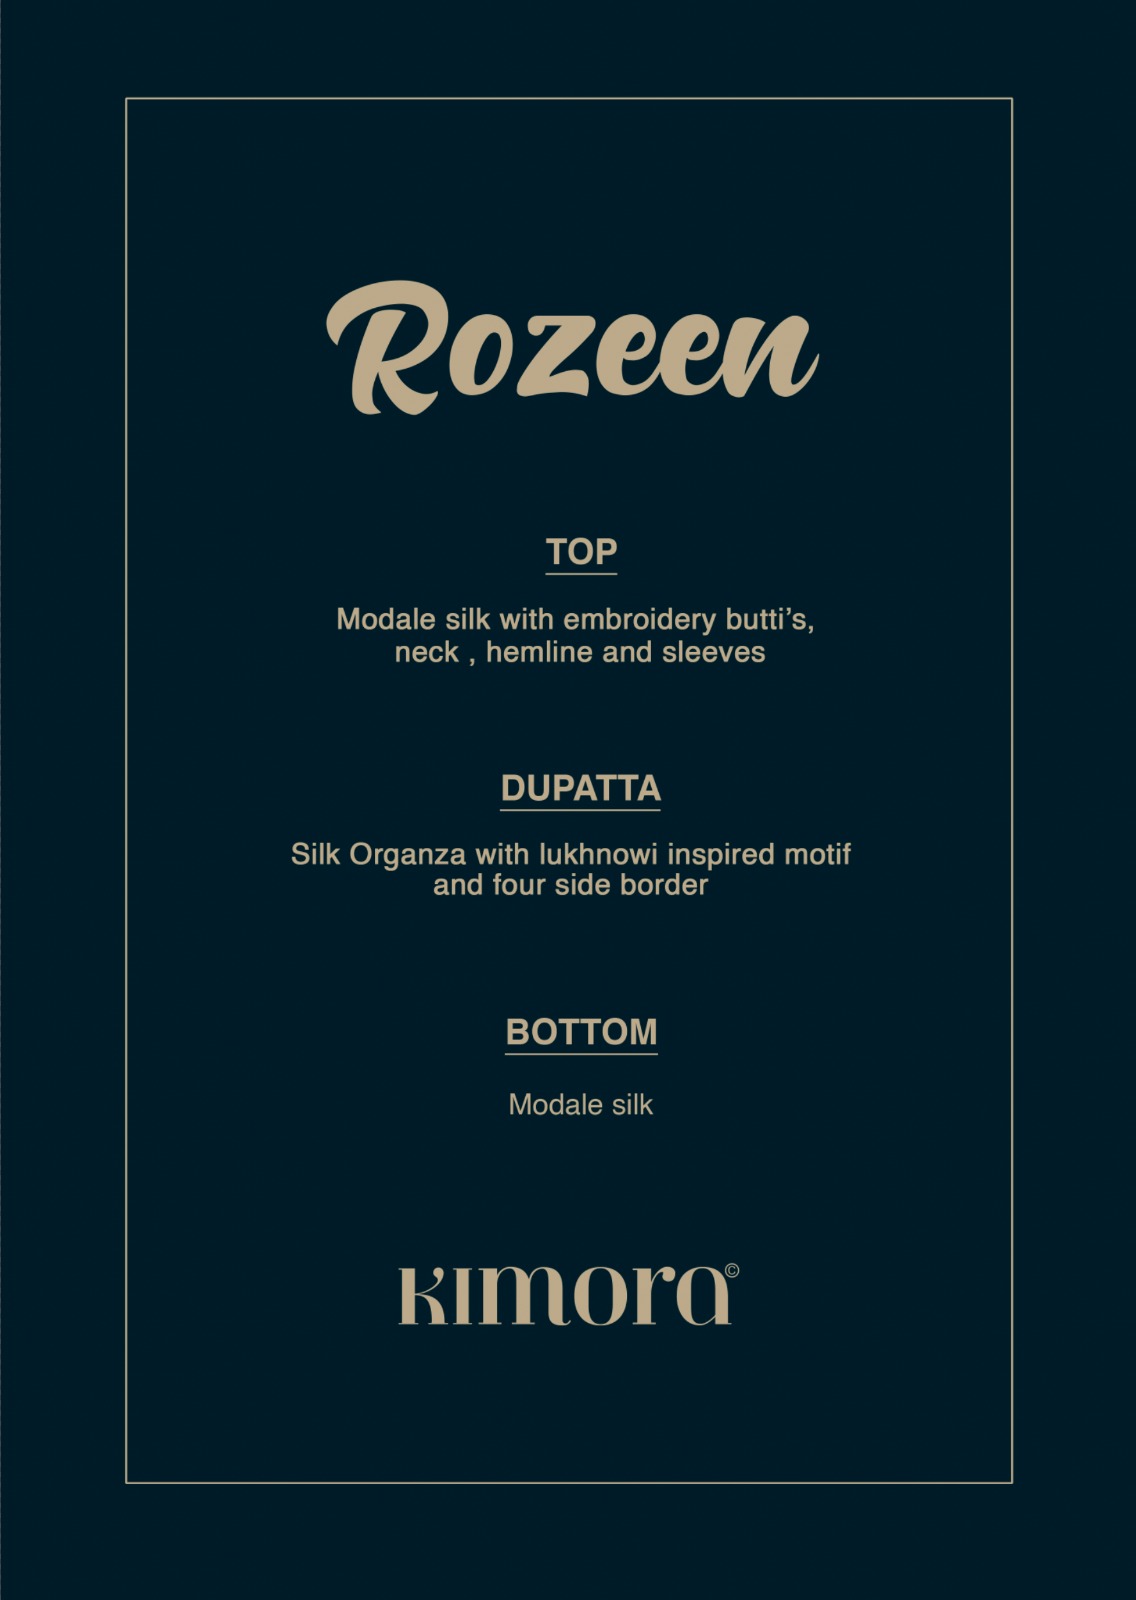 Kimora Rozeen collection 15